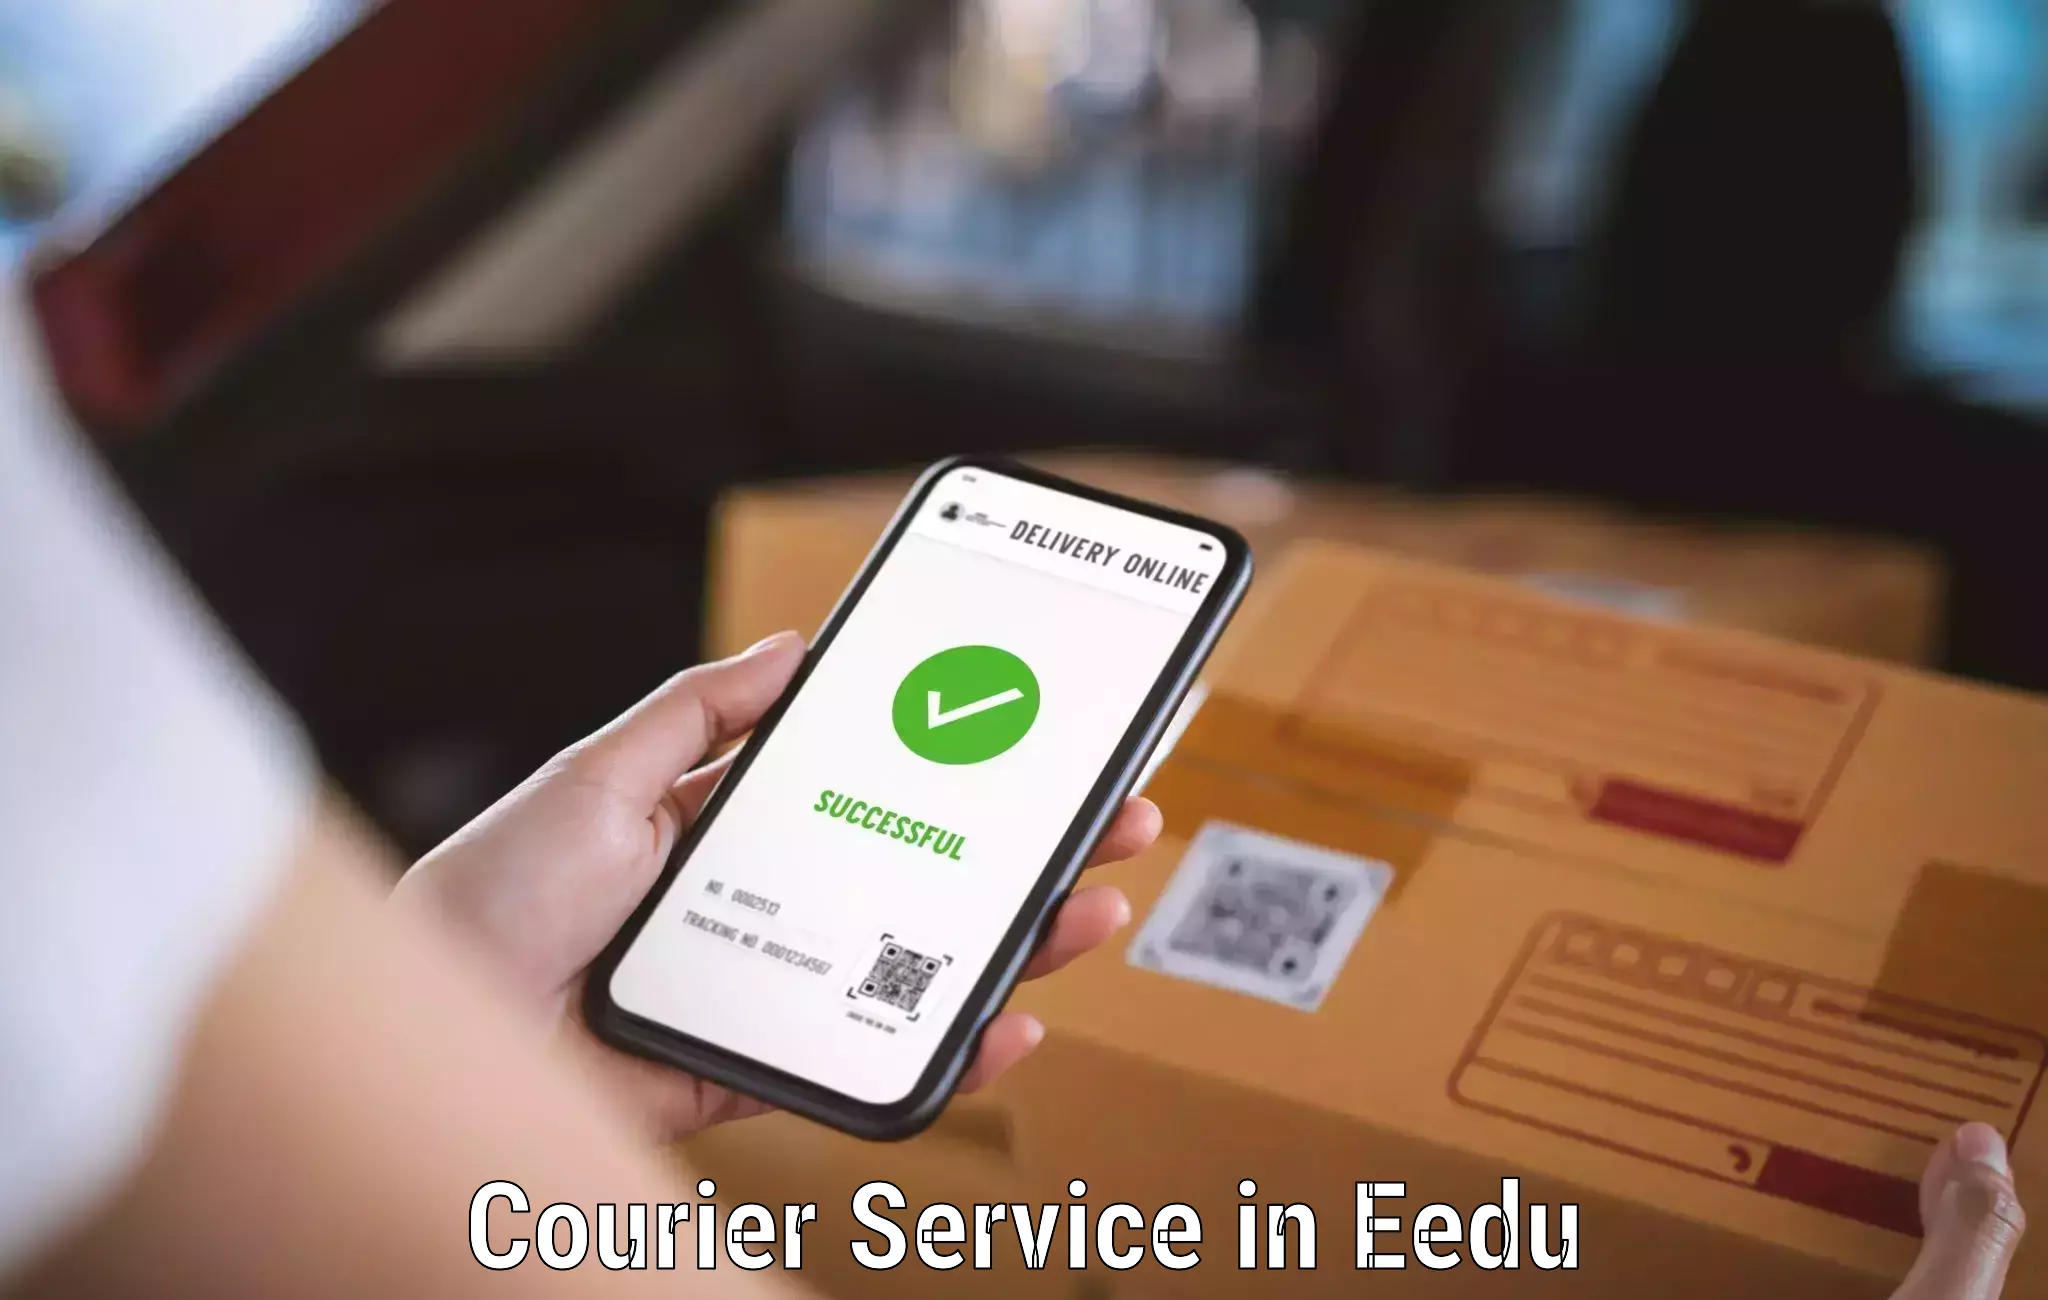 Courier service comparison in Eedu